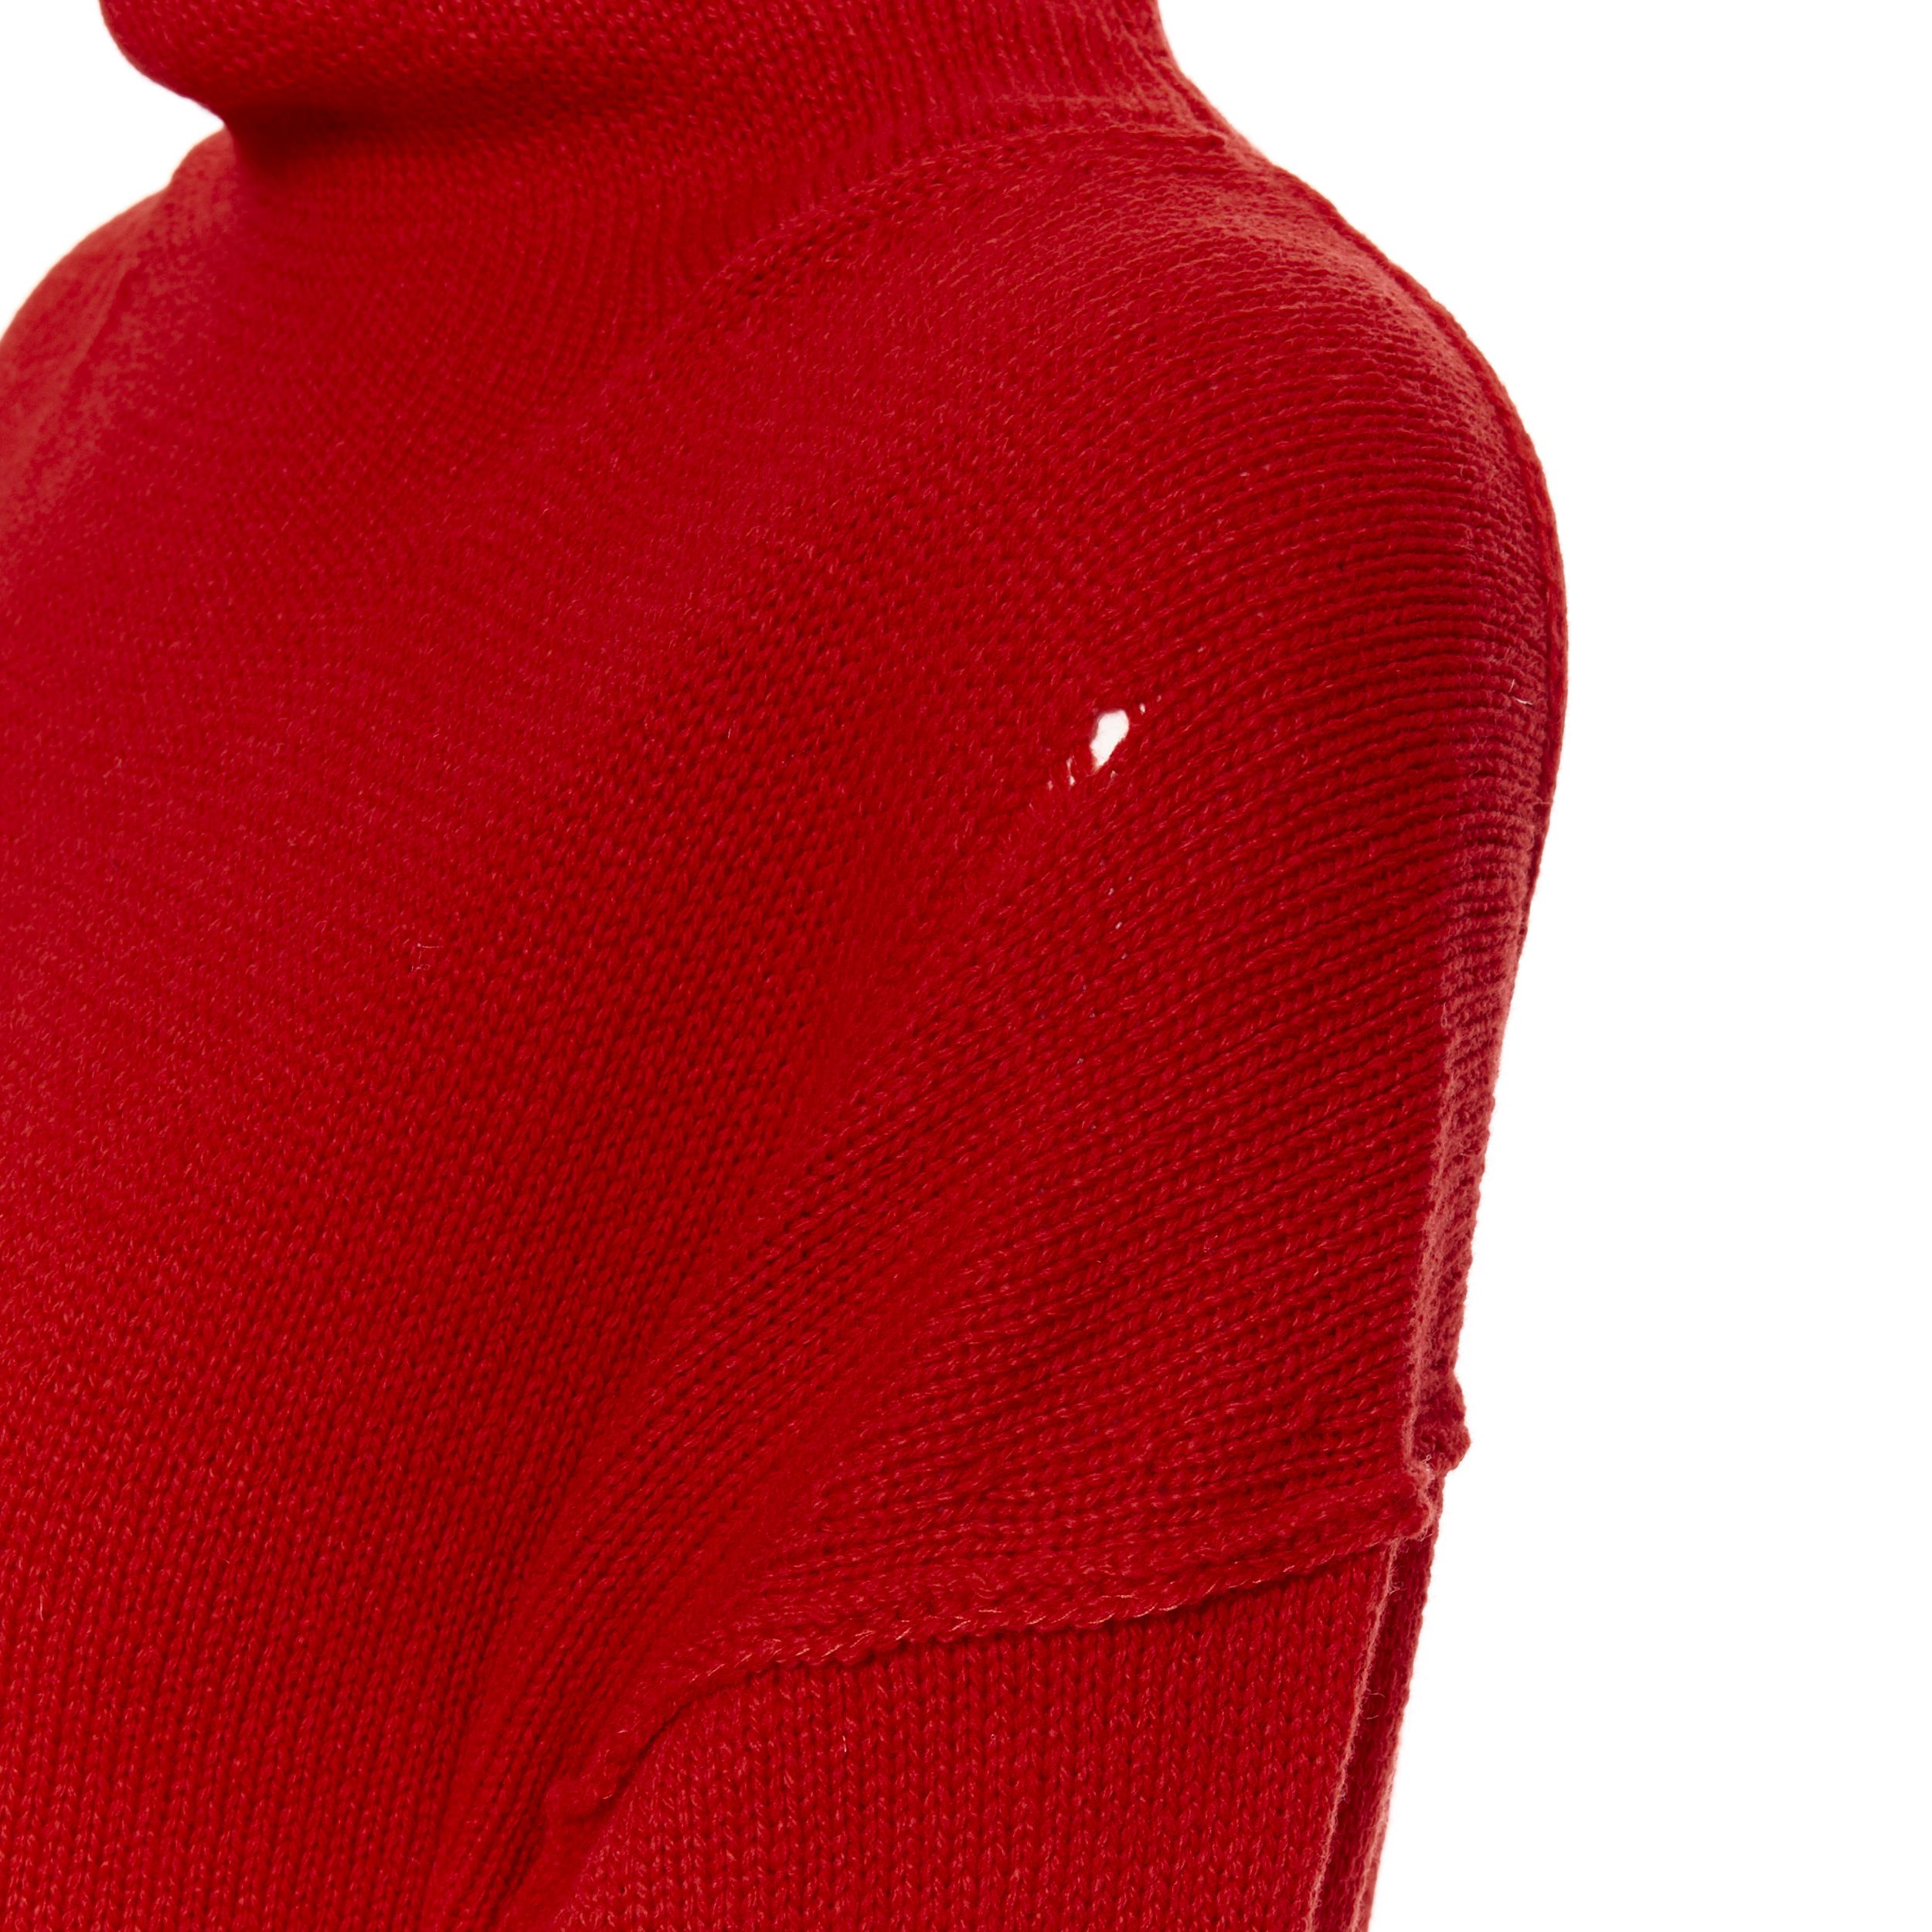 new B YOHJI YAMAMOTO Unisex 100% wool red distressed holey raw edge sweater M
Brand: B Yohji Yamamoto
Designer: Yohji Yamamoto
Model Name / Style: Wool sweater
Material: Wool
Color: Red
Pattern: Solid
Extra Detail: Dropped shoulder seam. Distressing